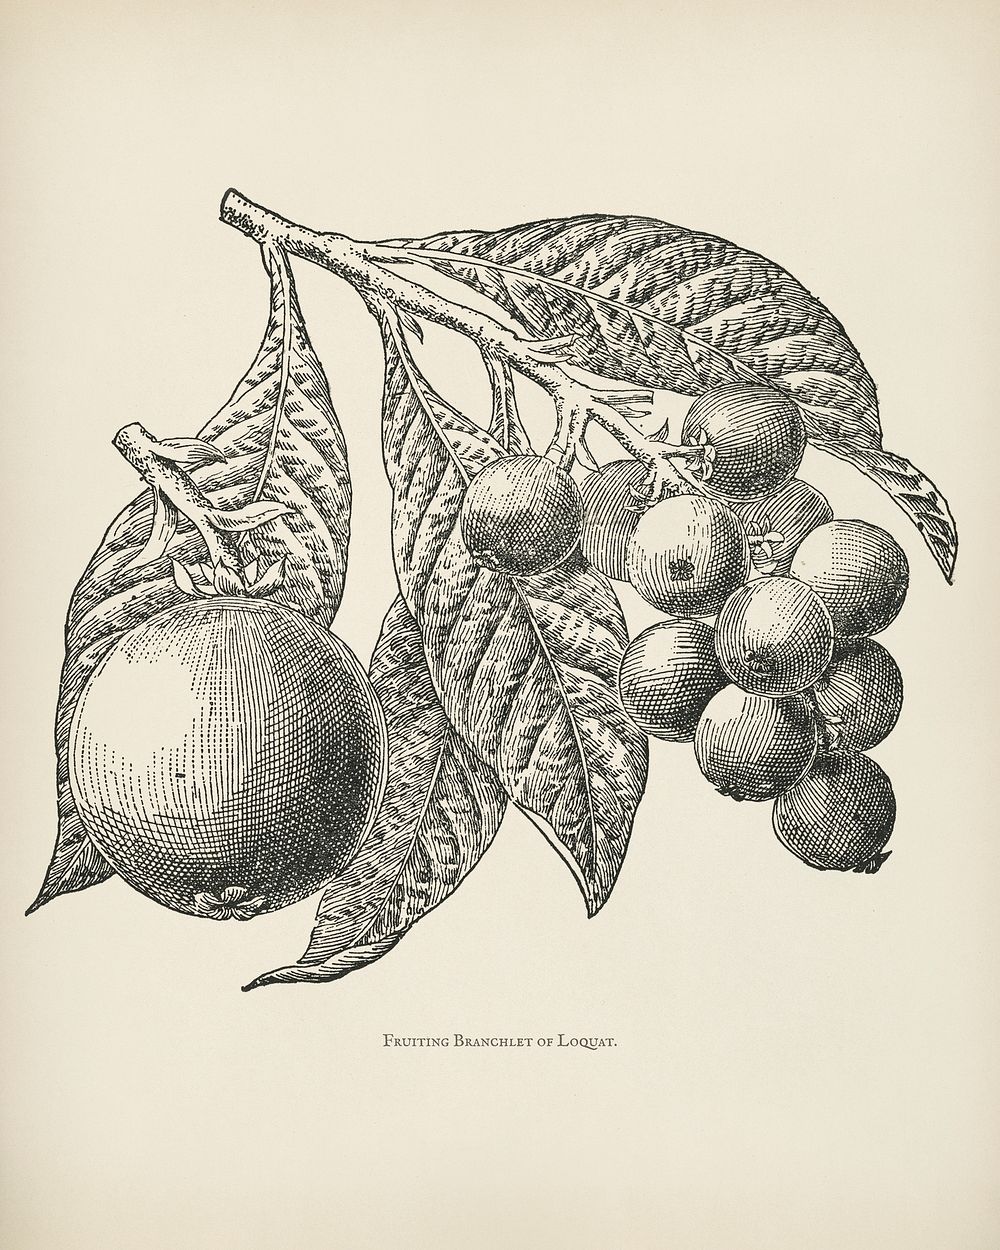 The fruit grower's guide : Vintage illustration of loquat